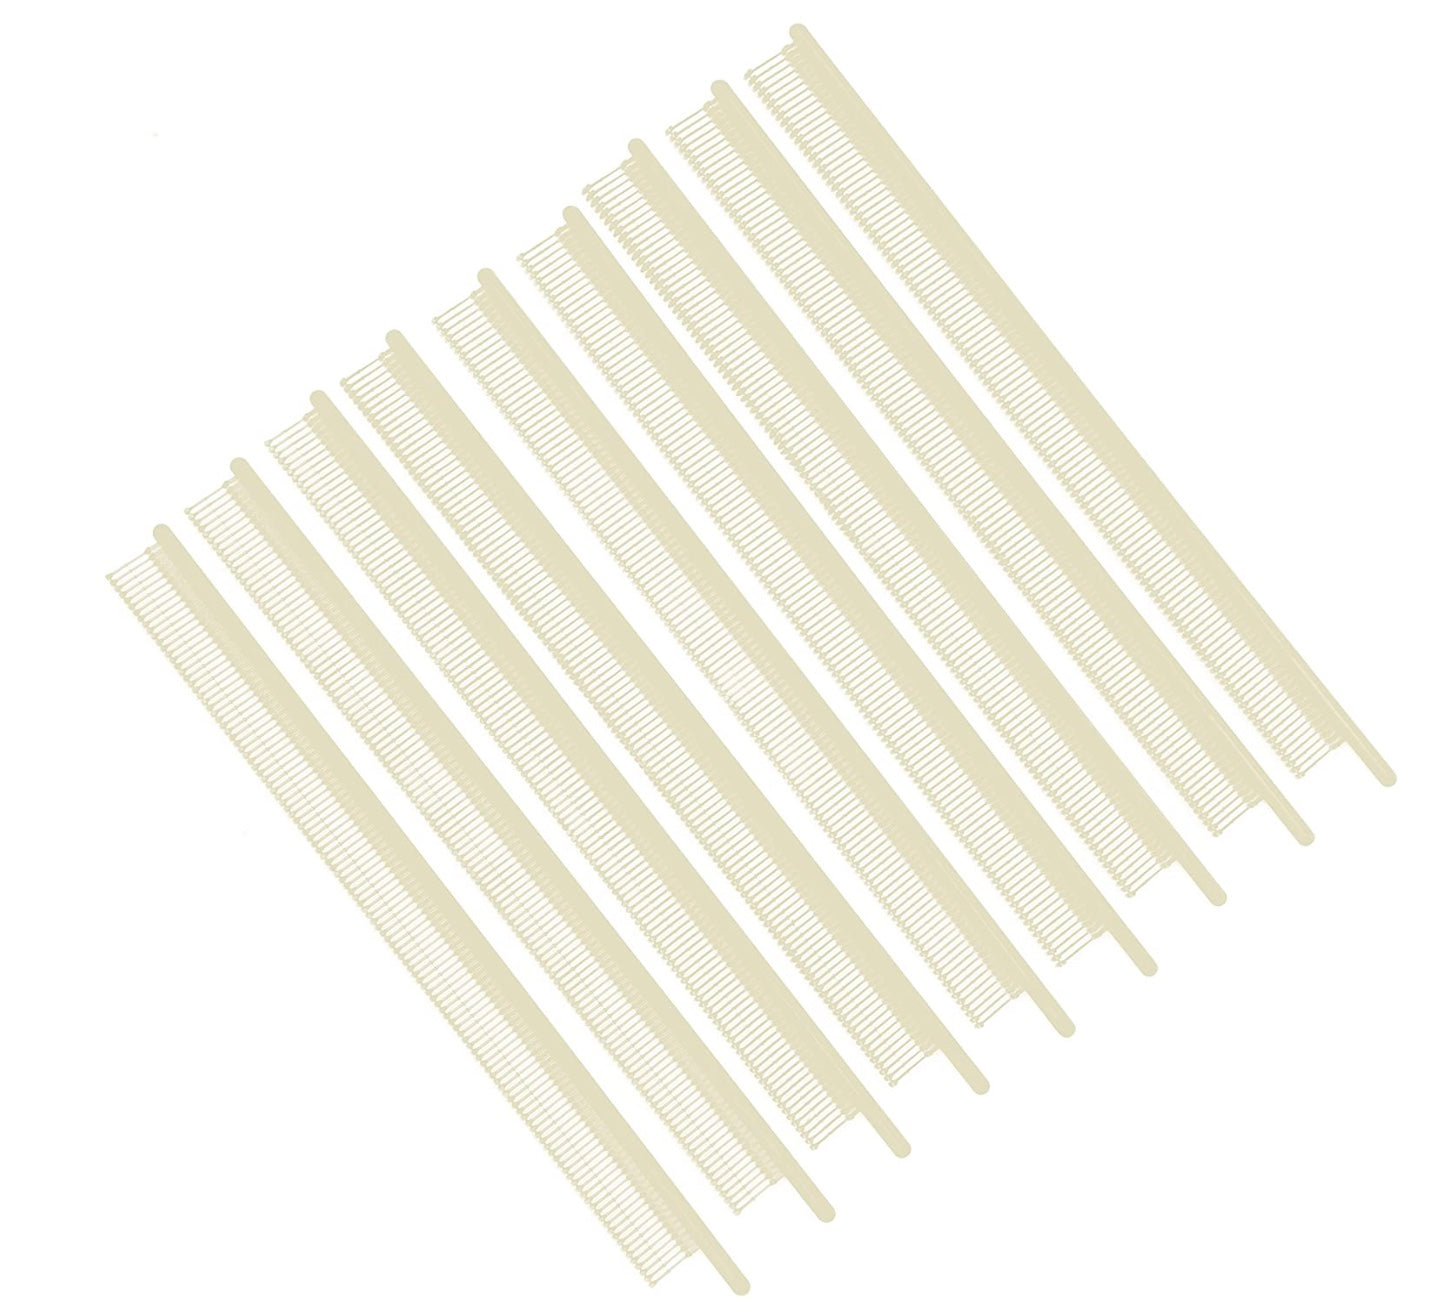 Microstitch Fasteners Refill Pack - White